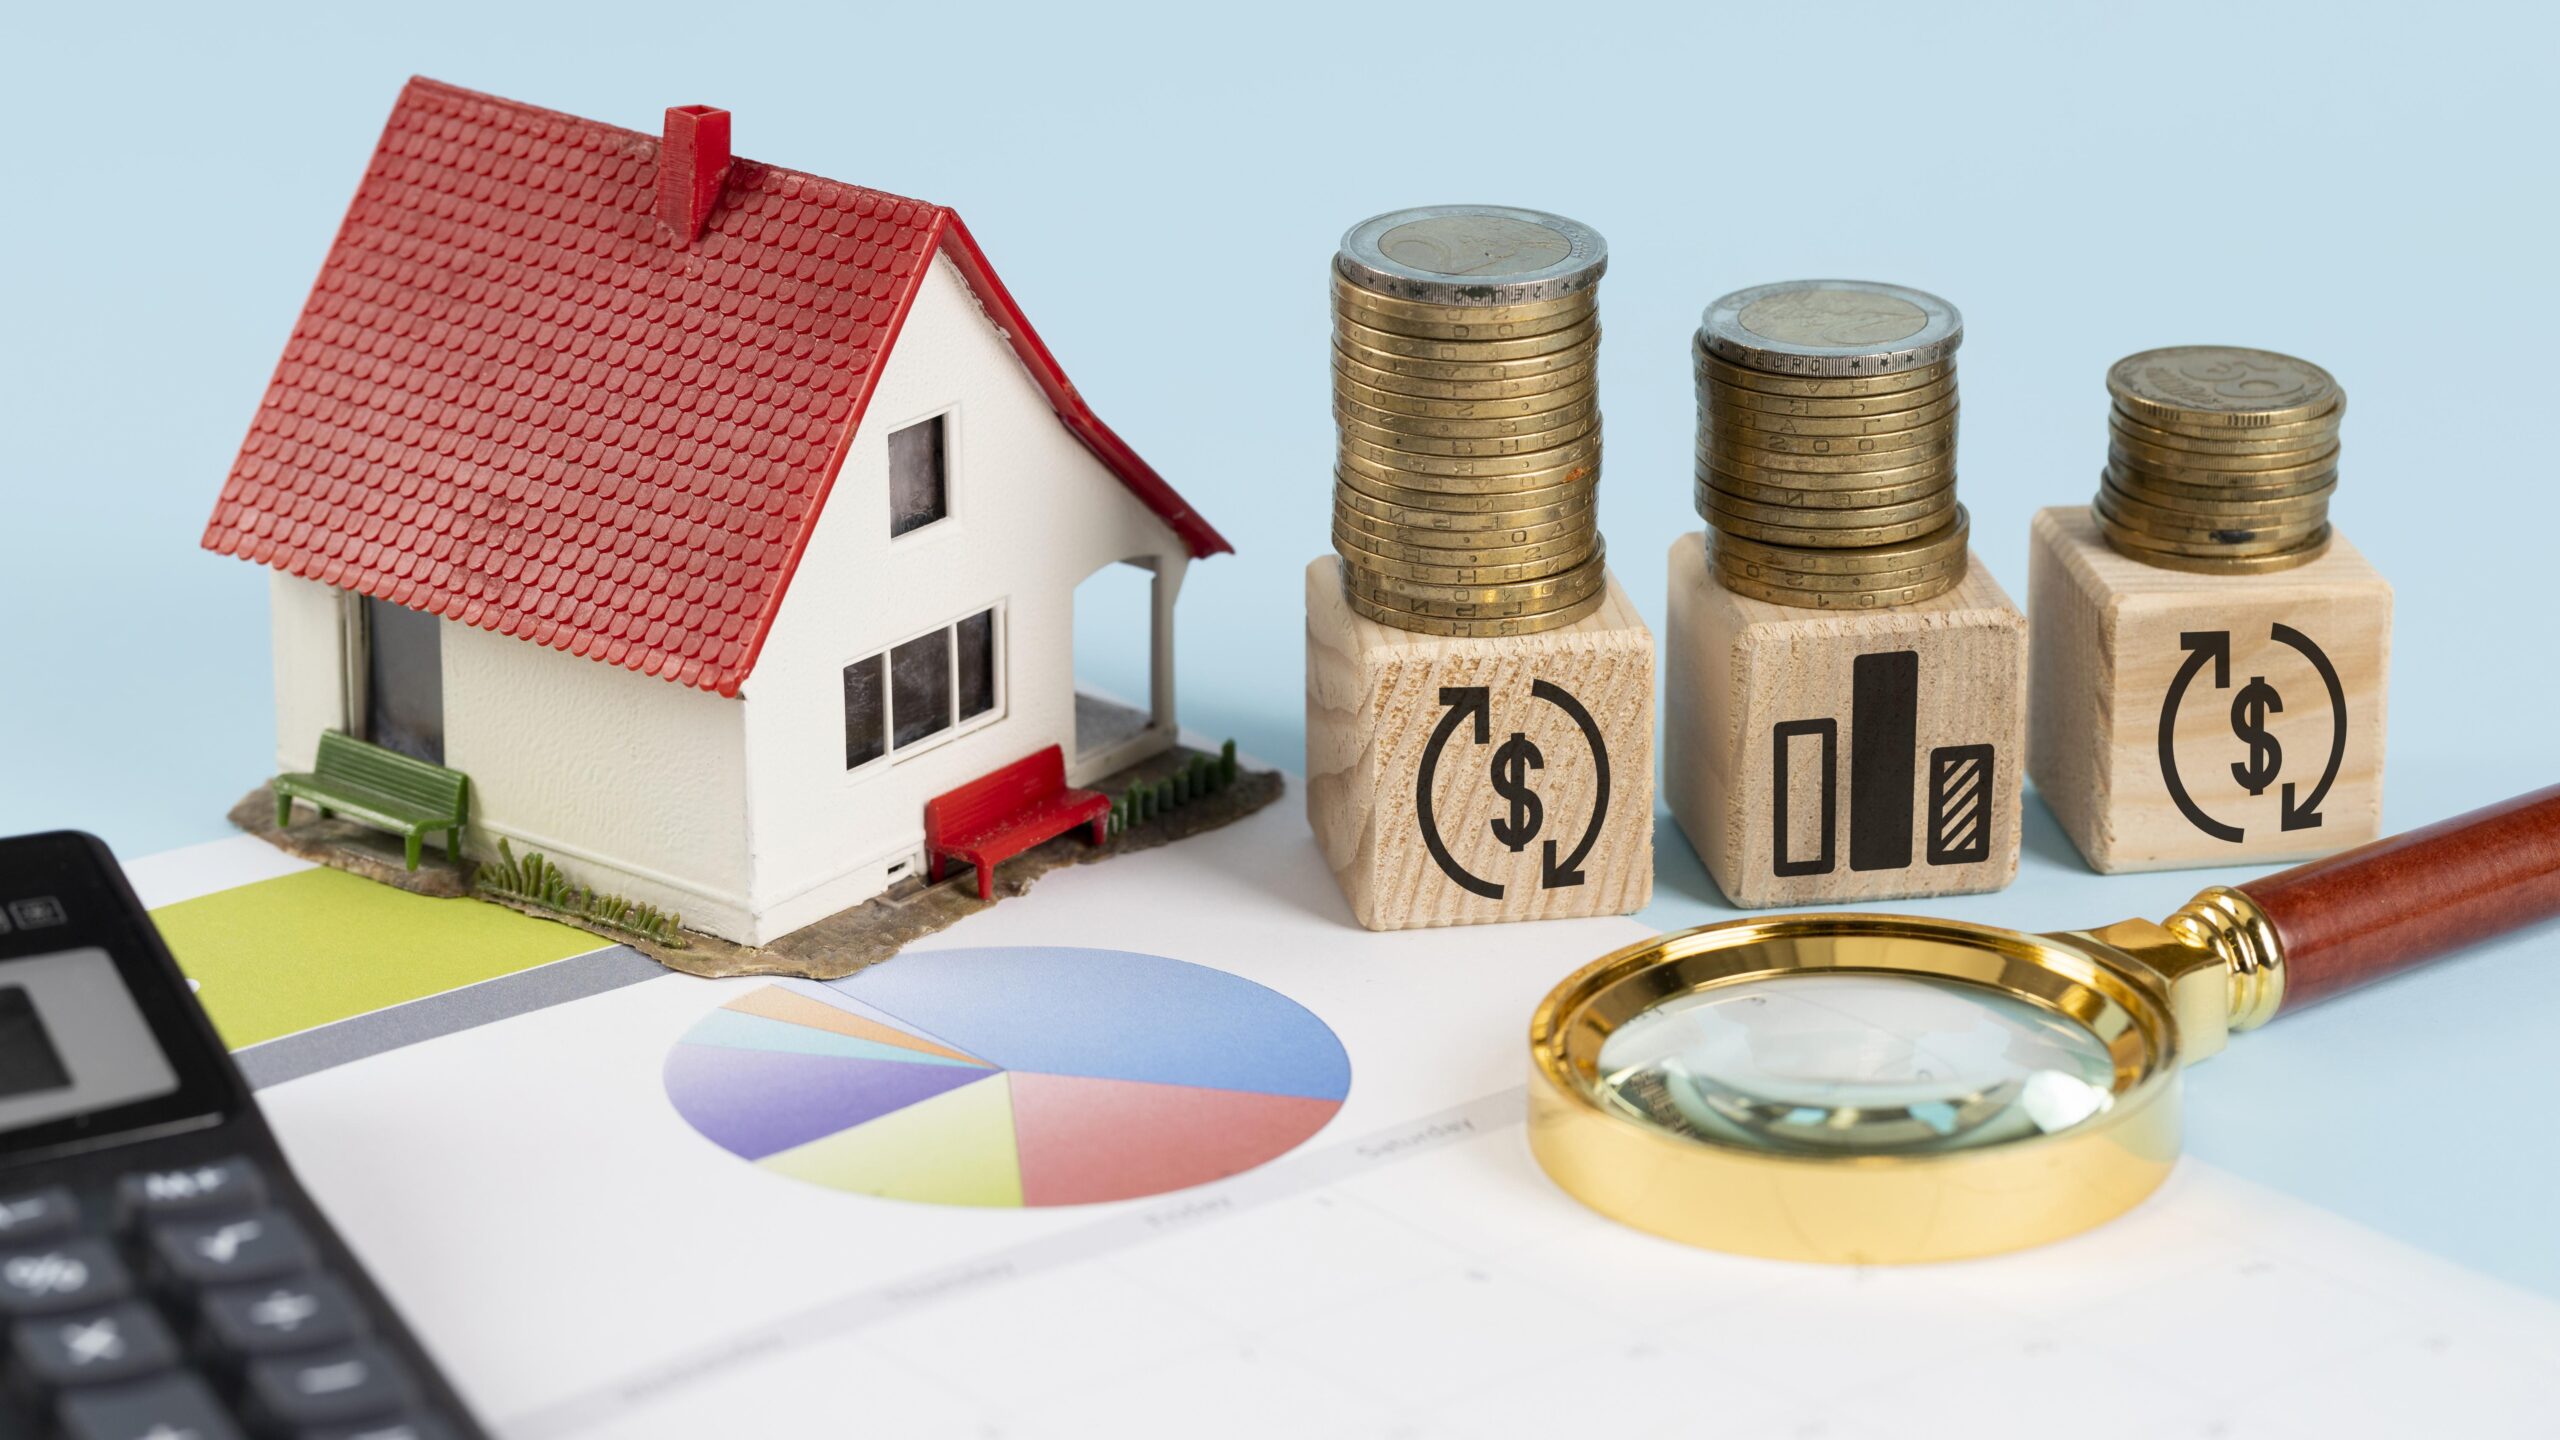 Invertir en tu hogar puede tener múltiples beneficios, tanto a corto como a largo plazo